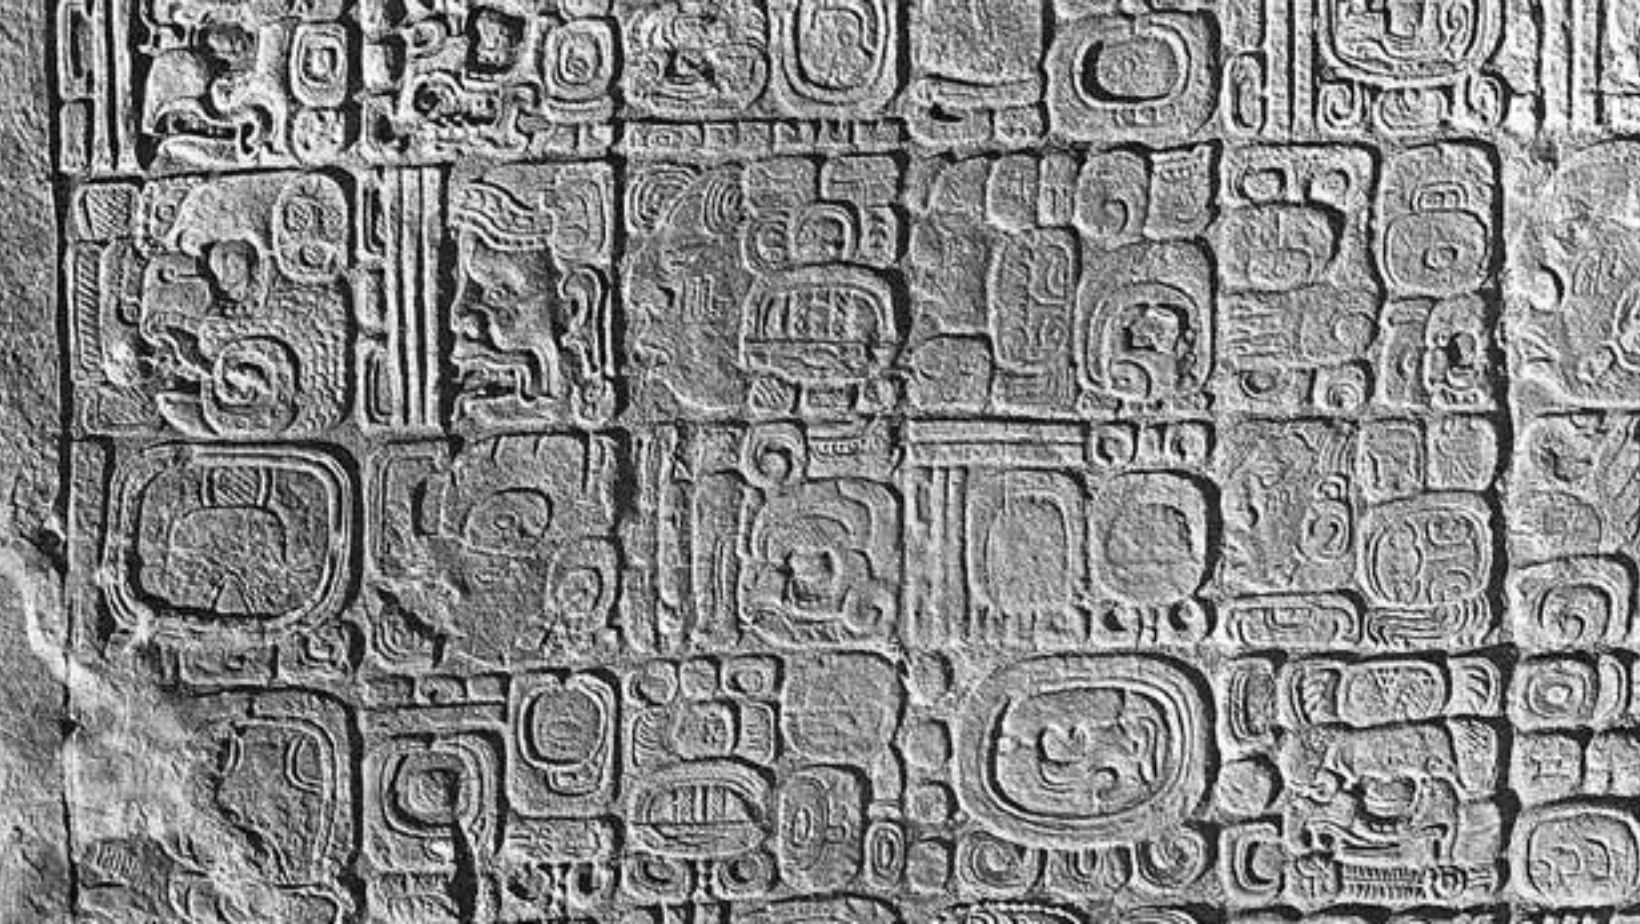 Deciphering the Ancient Maya Script on Stelae